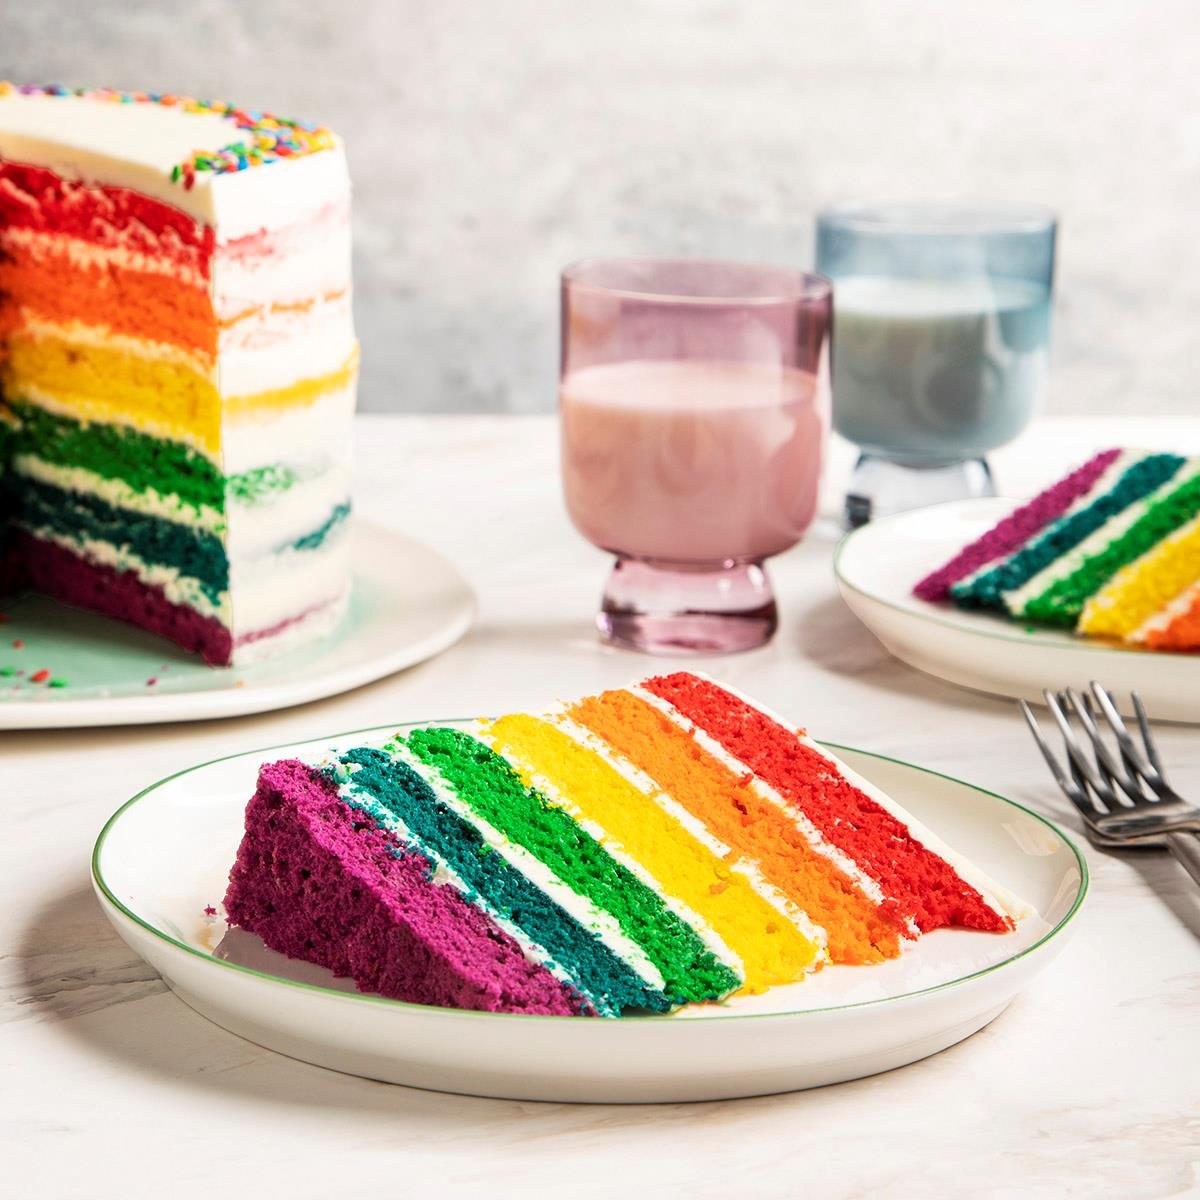 Birthday Cake Ideas: 33 Recipes for Every Birthday on Your Calendar